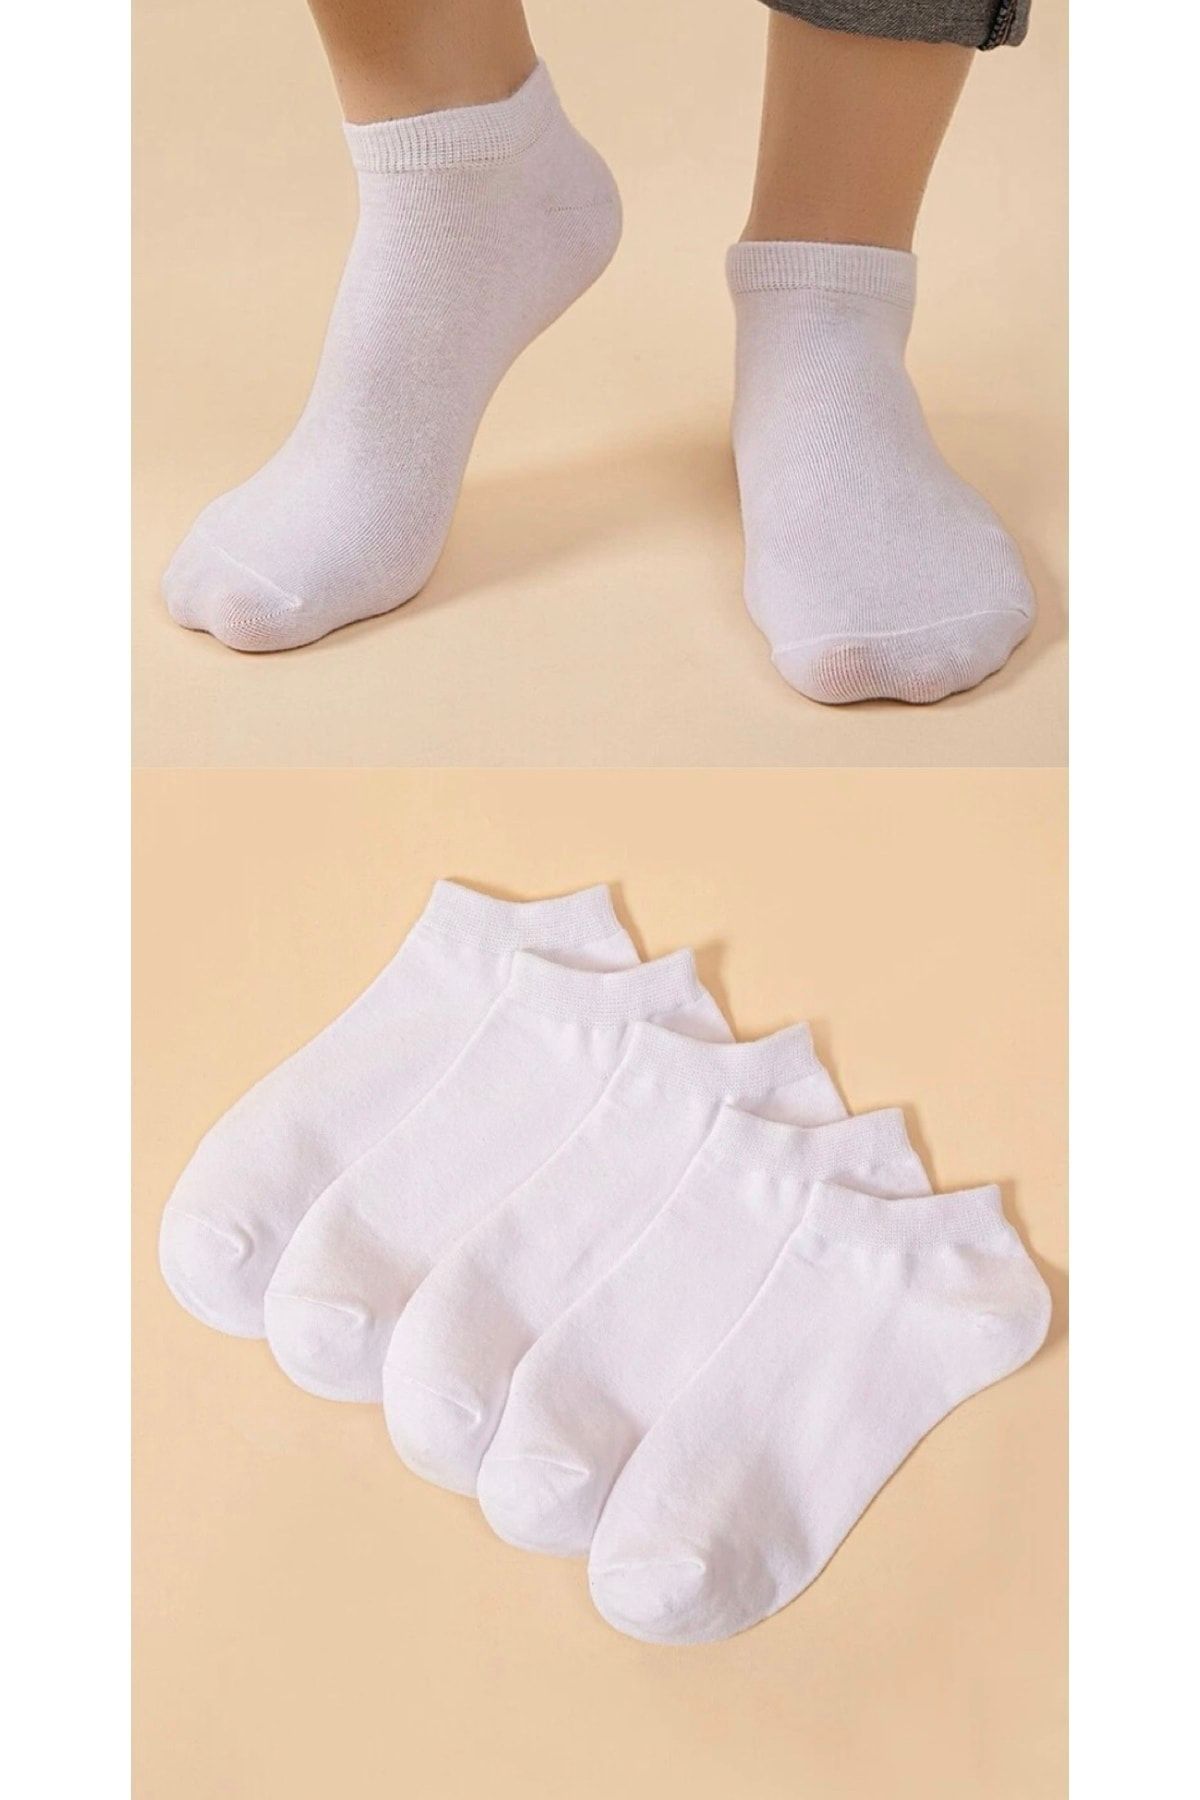 dm del more 5’li Düz Beyaz Bilek Boy Patik Çorap